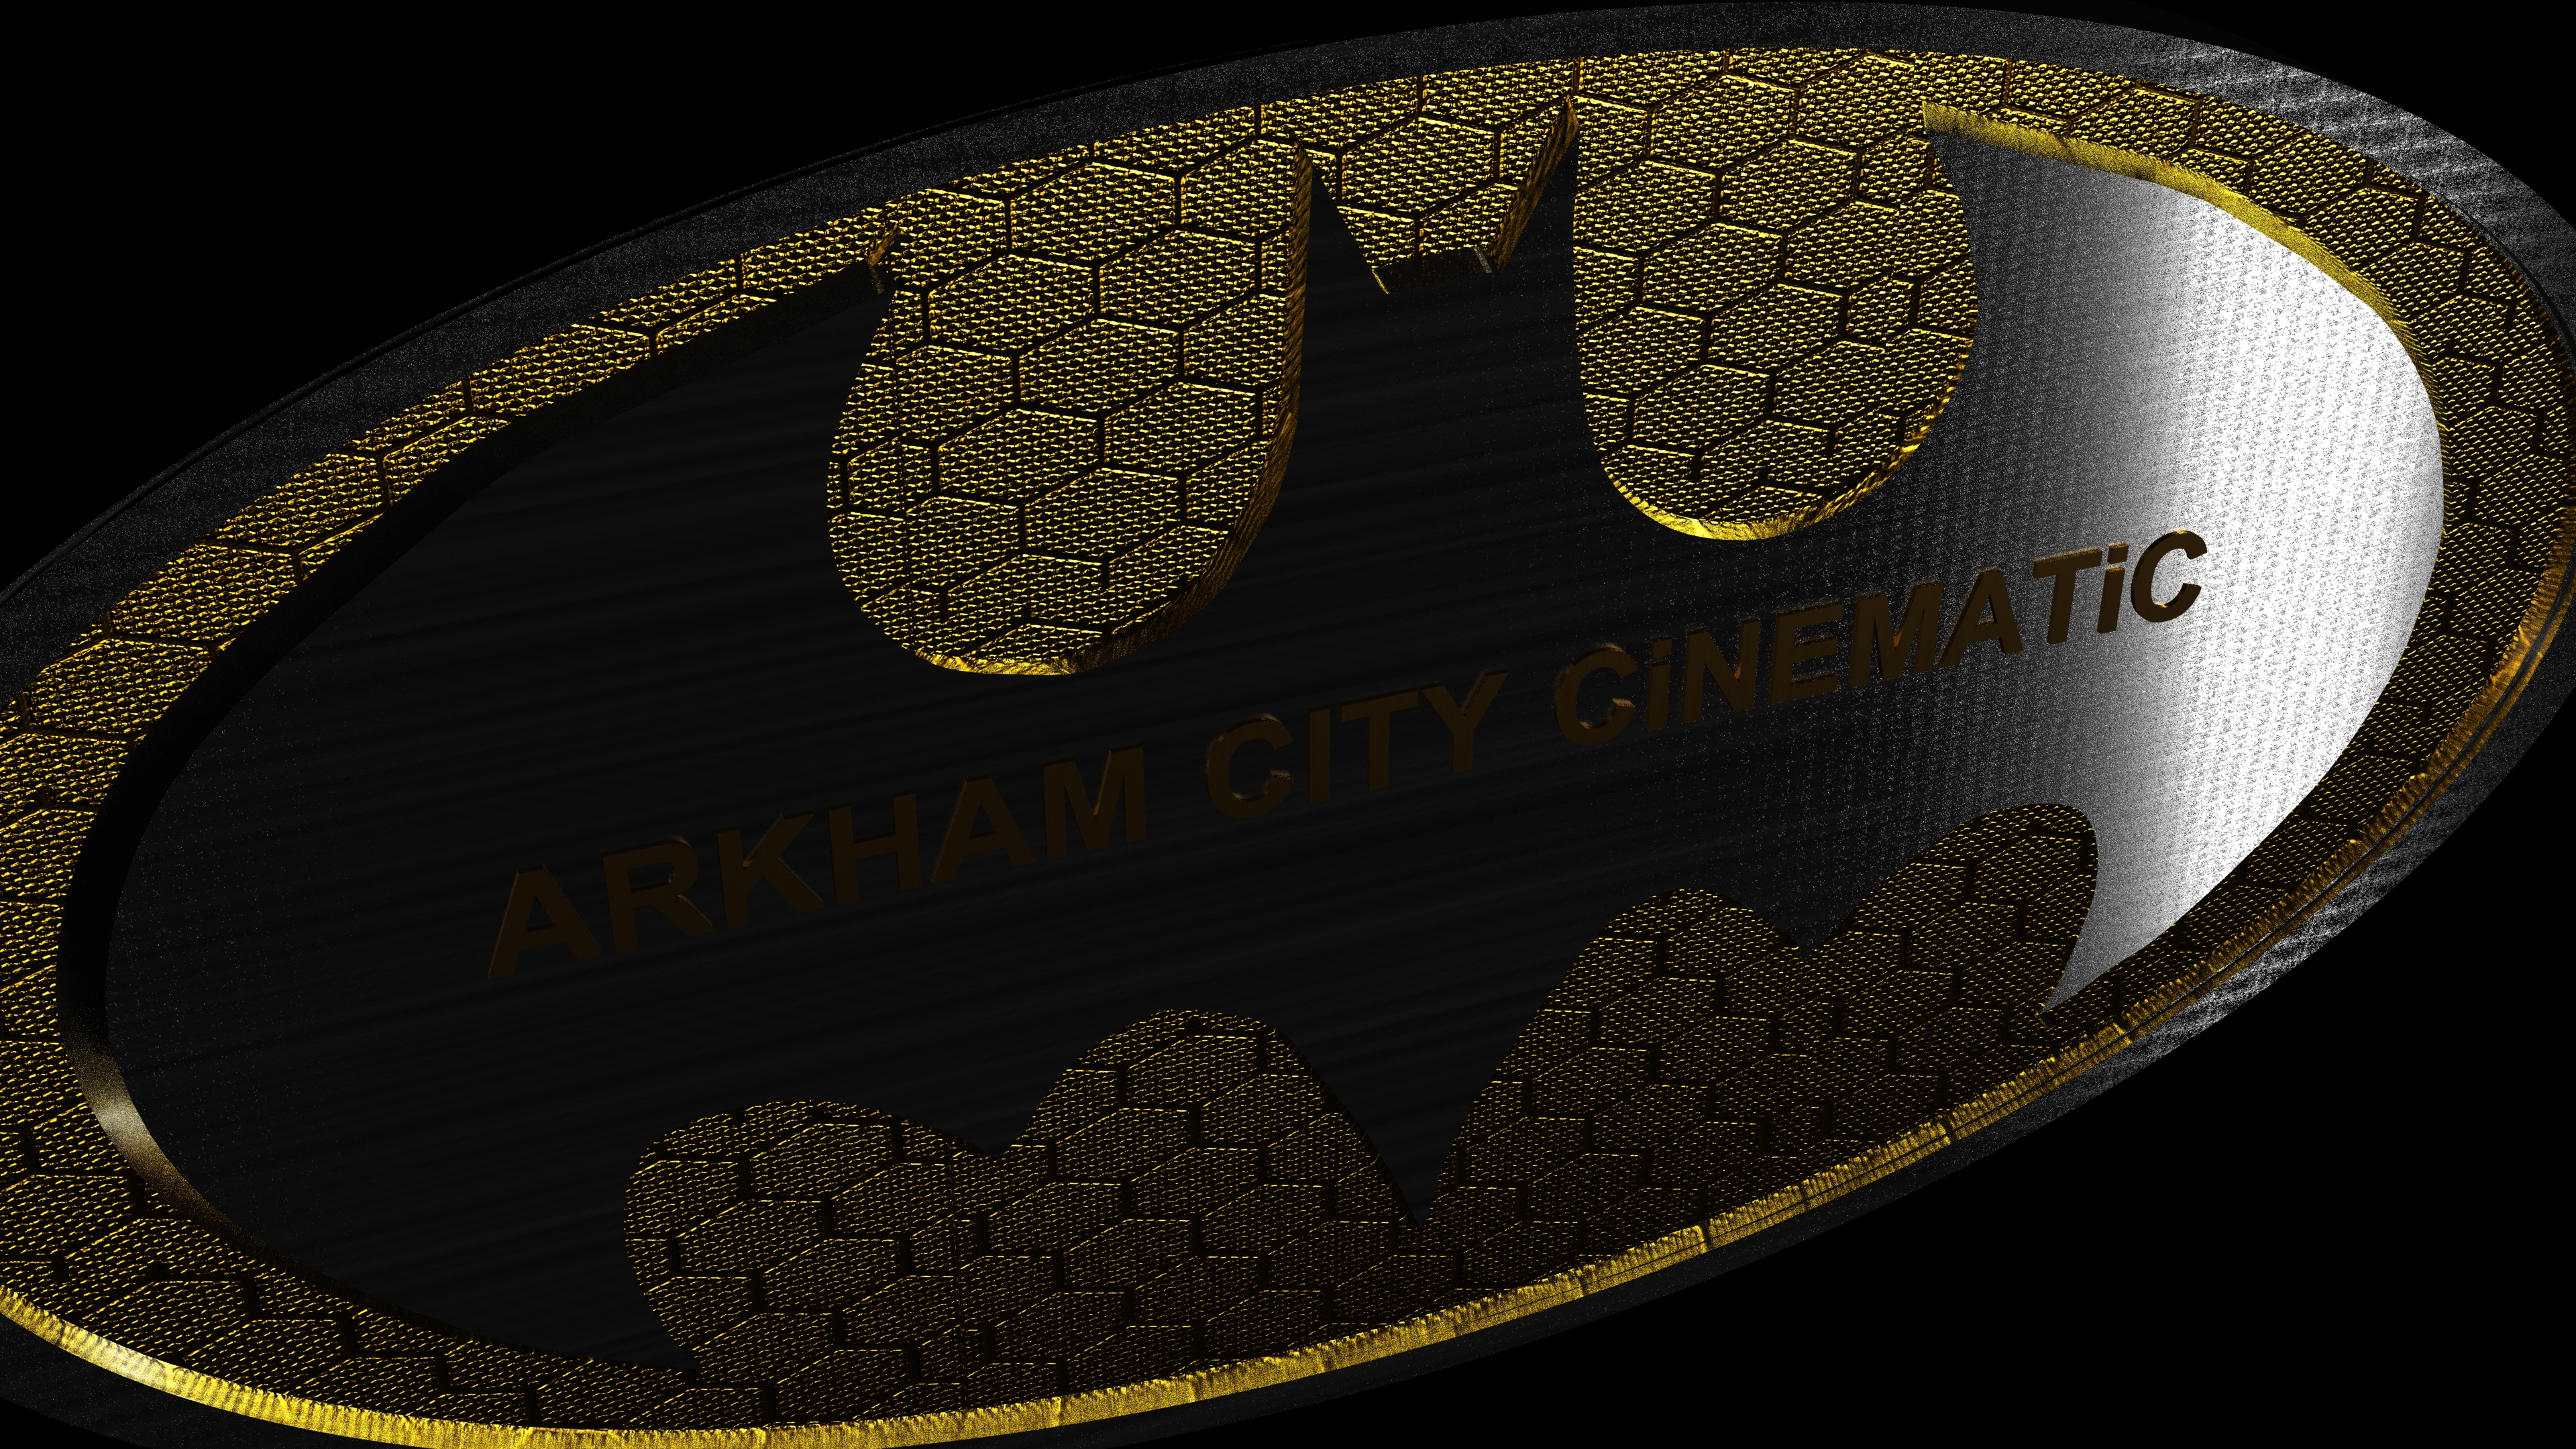 Batman Arkham Knight: 10 Mods You Need To Play